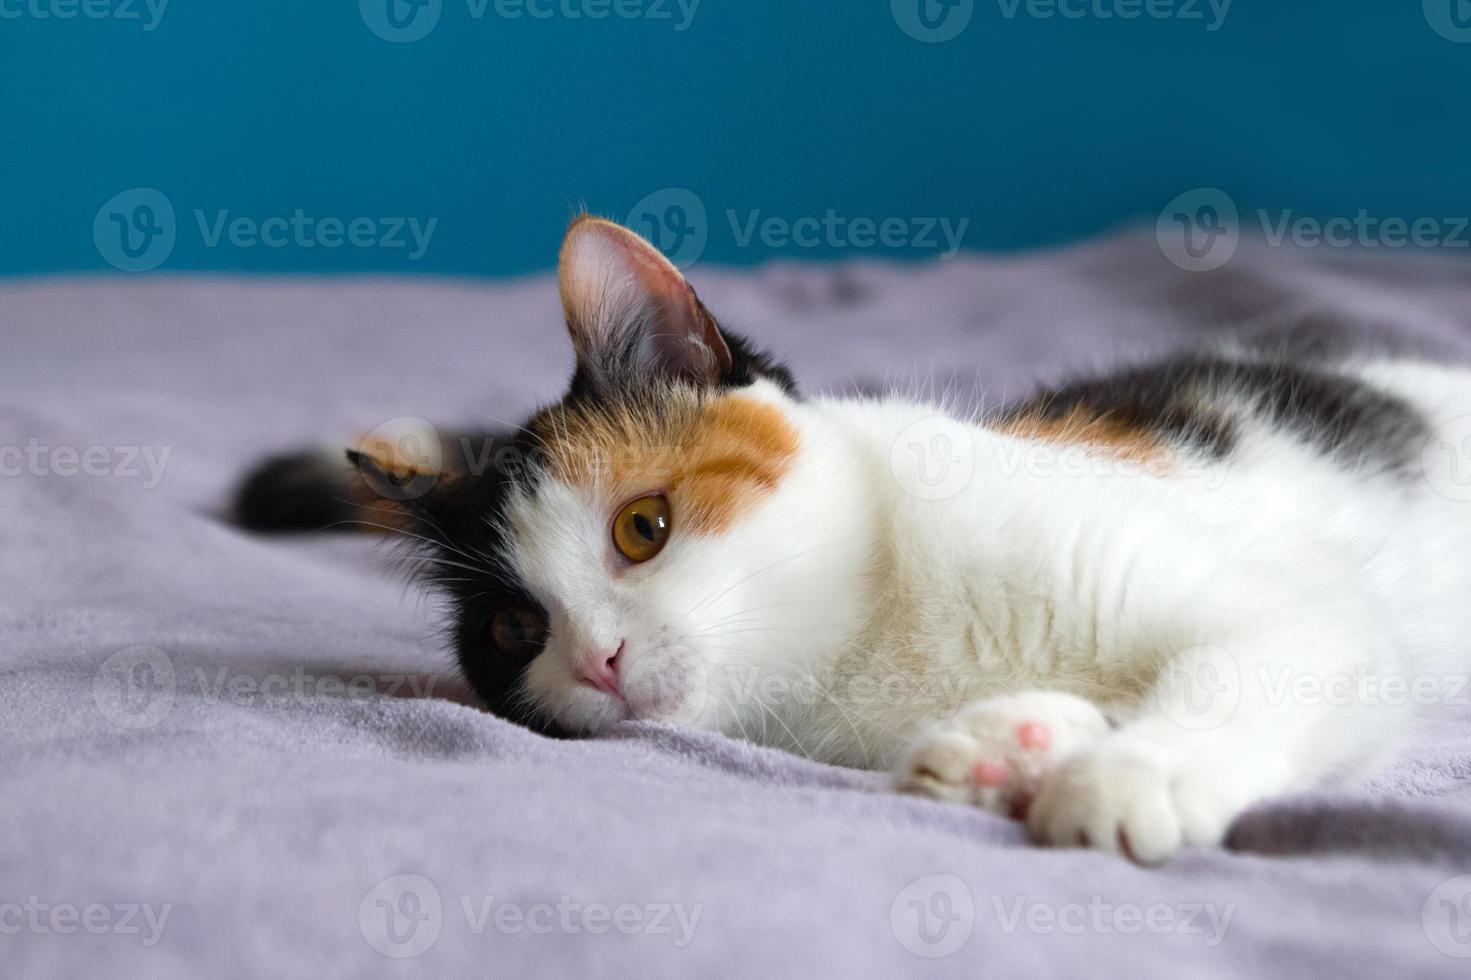 bonito gato de tartaruga cansado está descansando no cobertor roxo. foto